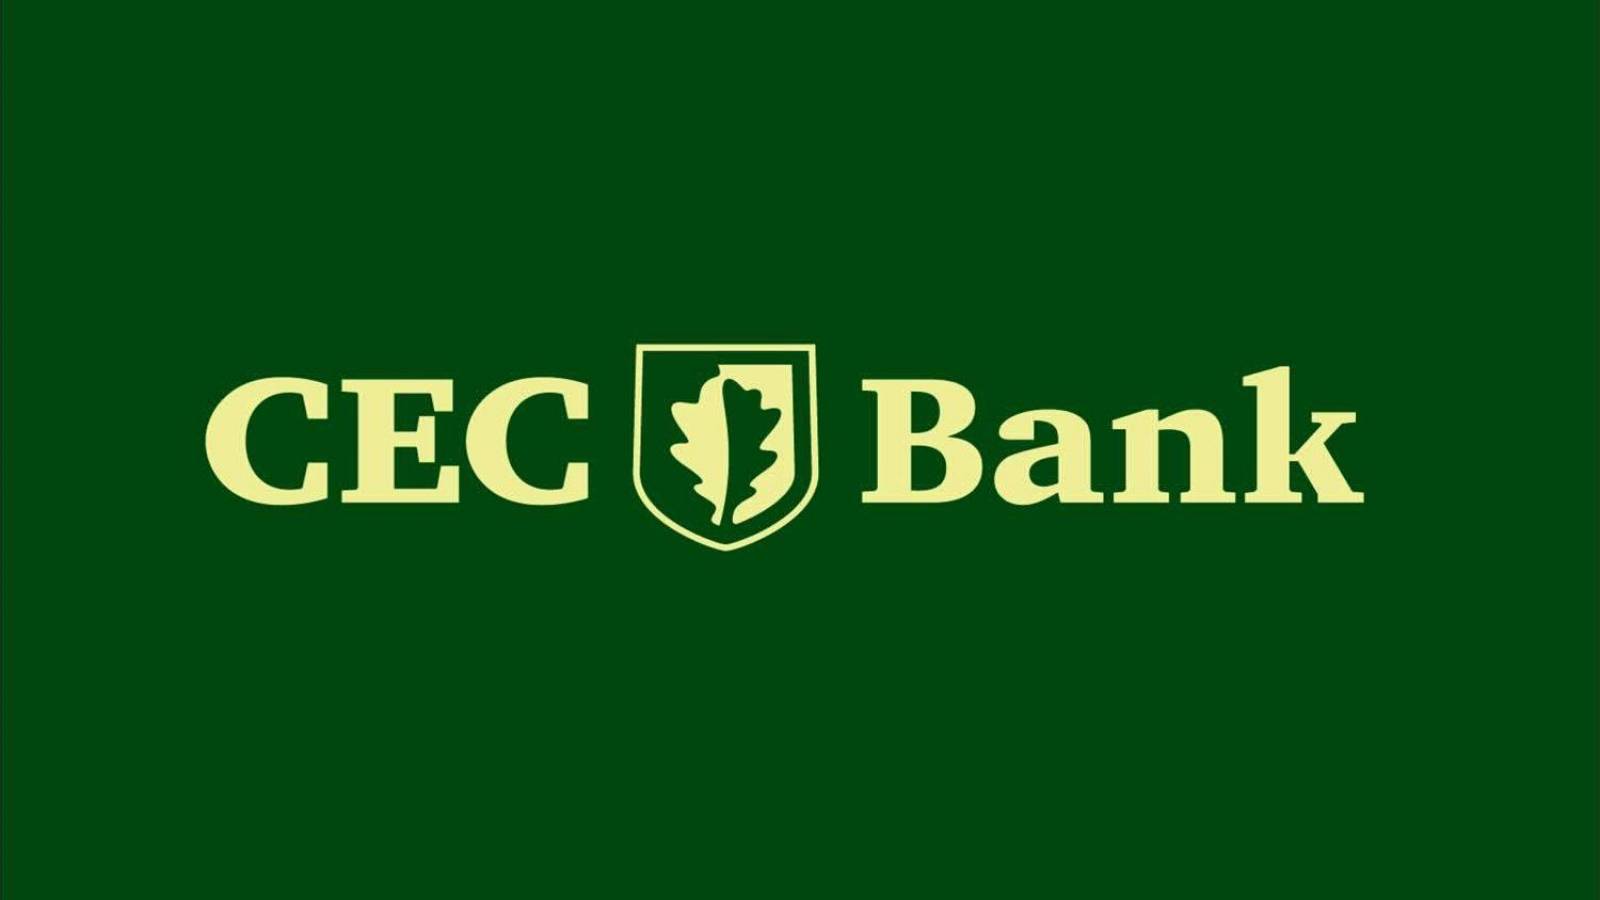 CEC Bankteller